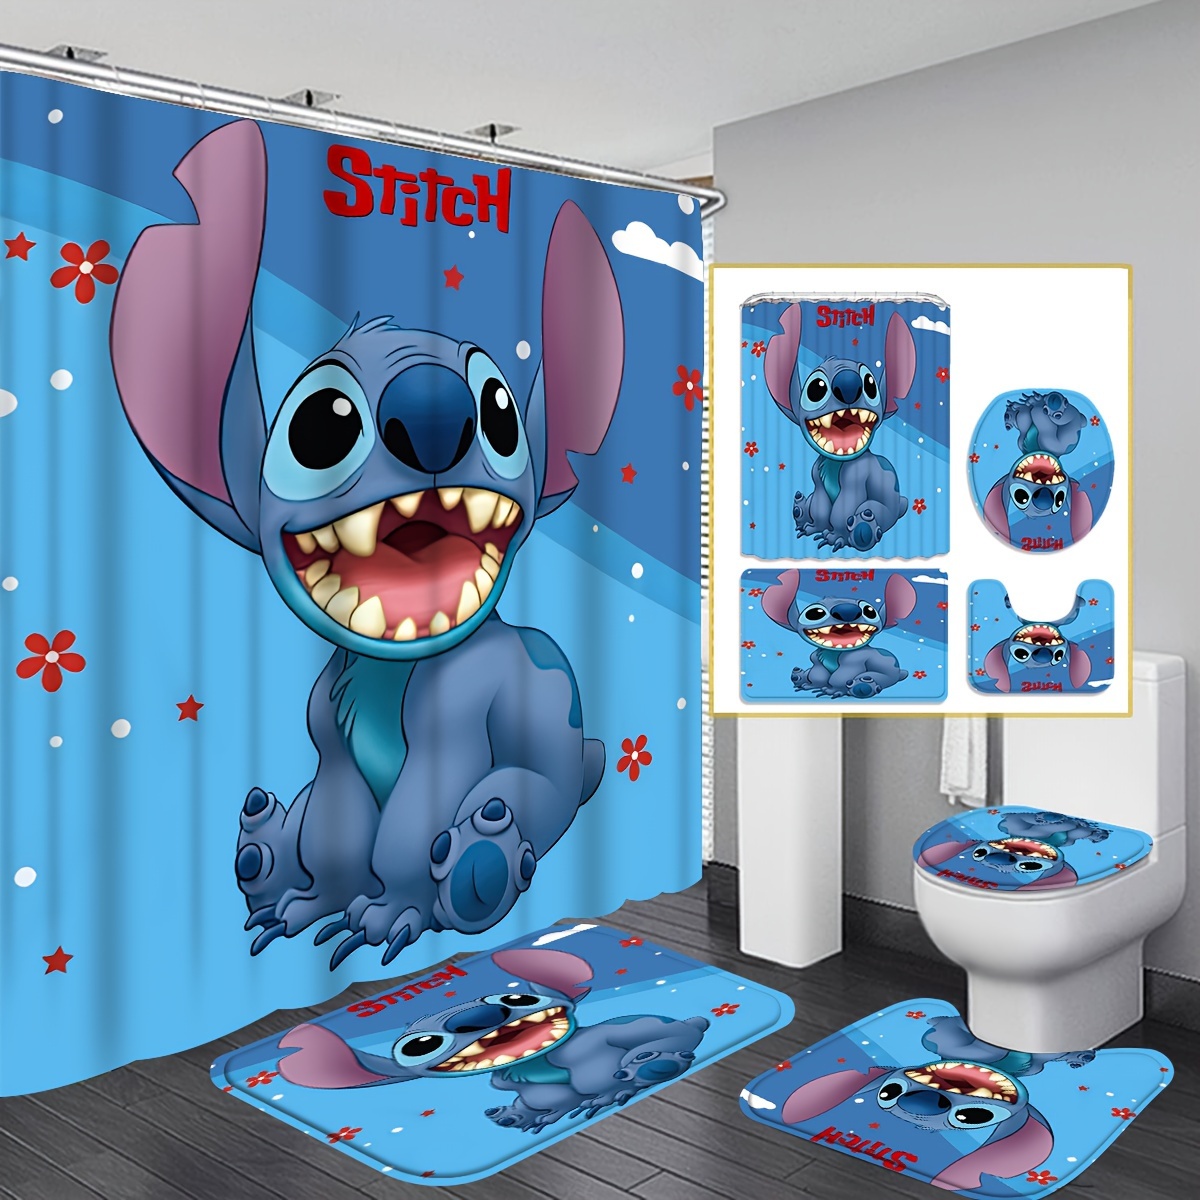 

Disney Stitch 4-piece Shower Curtain Set - Waterproof, Includes 12 Hooks & Non-slip Bath Mats, U-shaped Toilet Mat - Perfect For Bathroom Decor